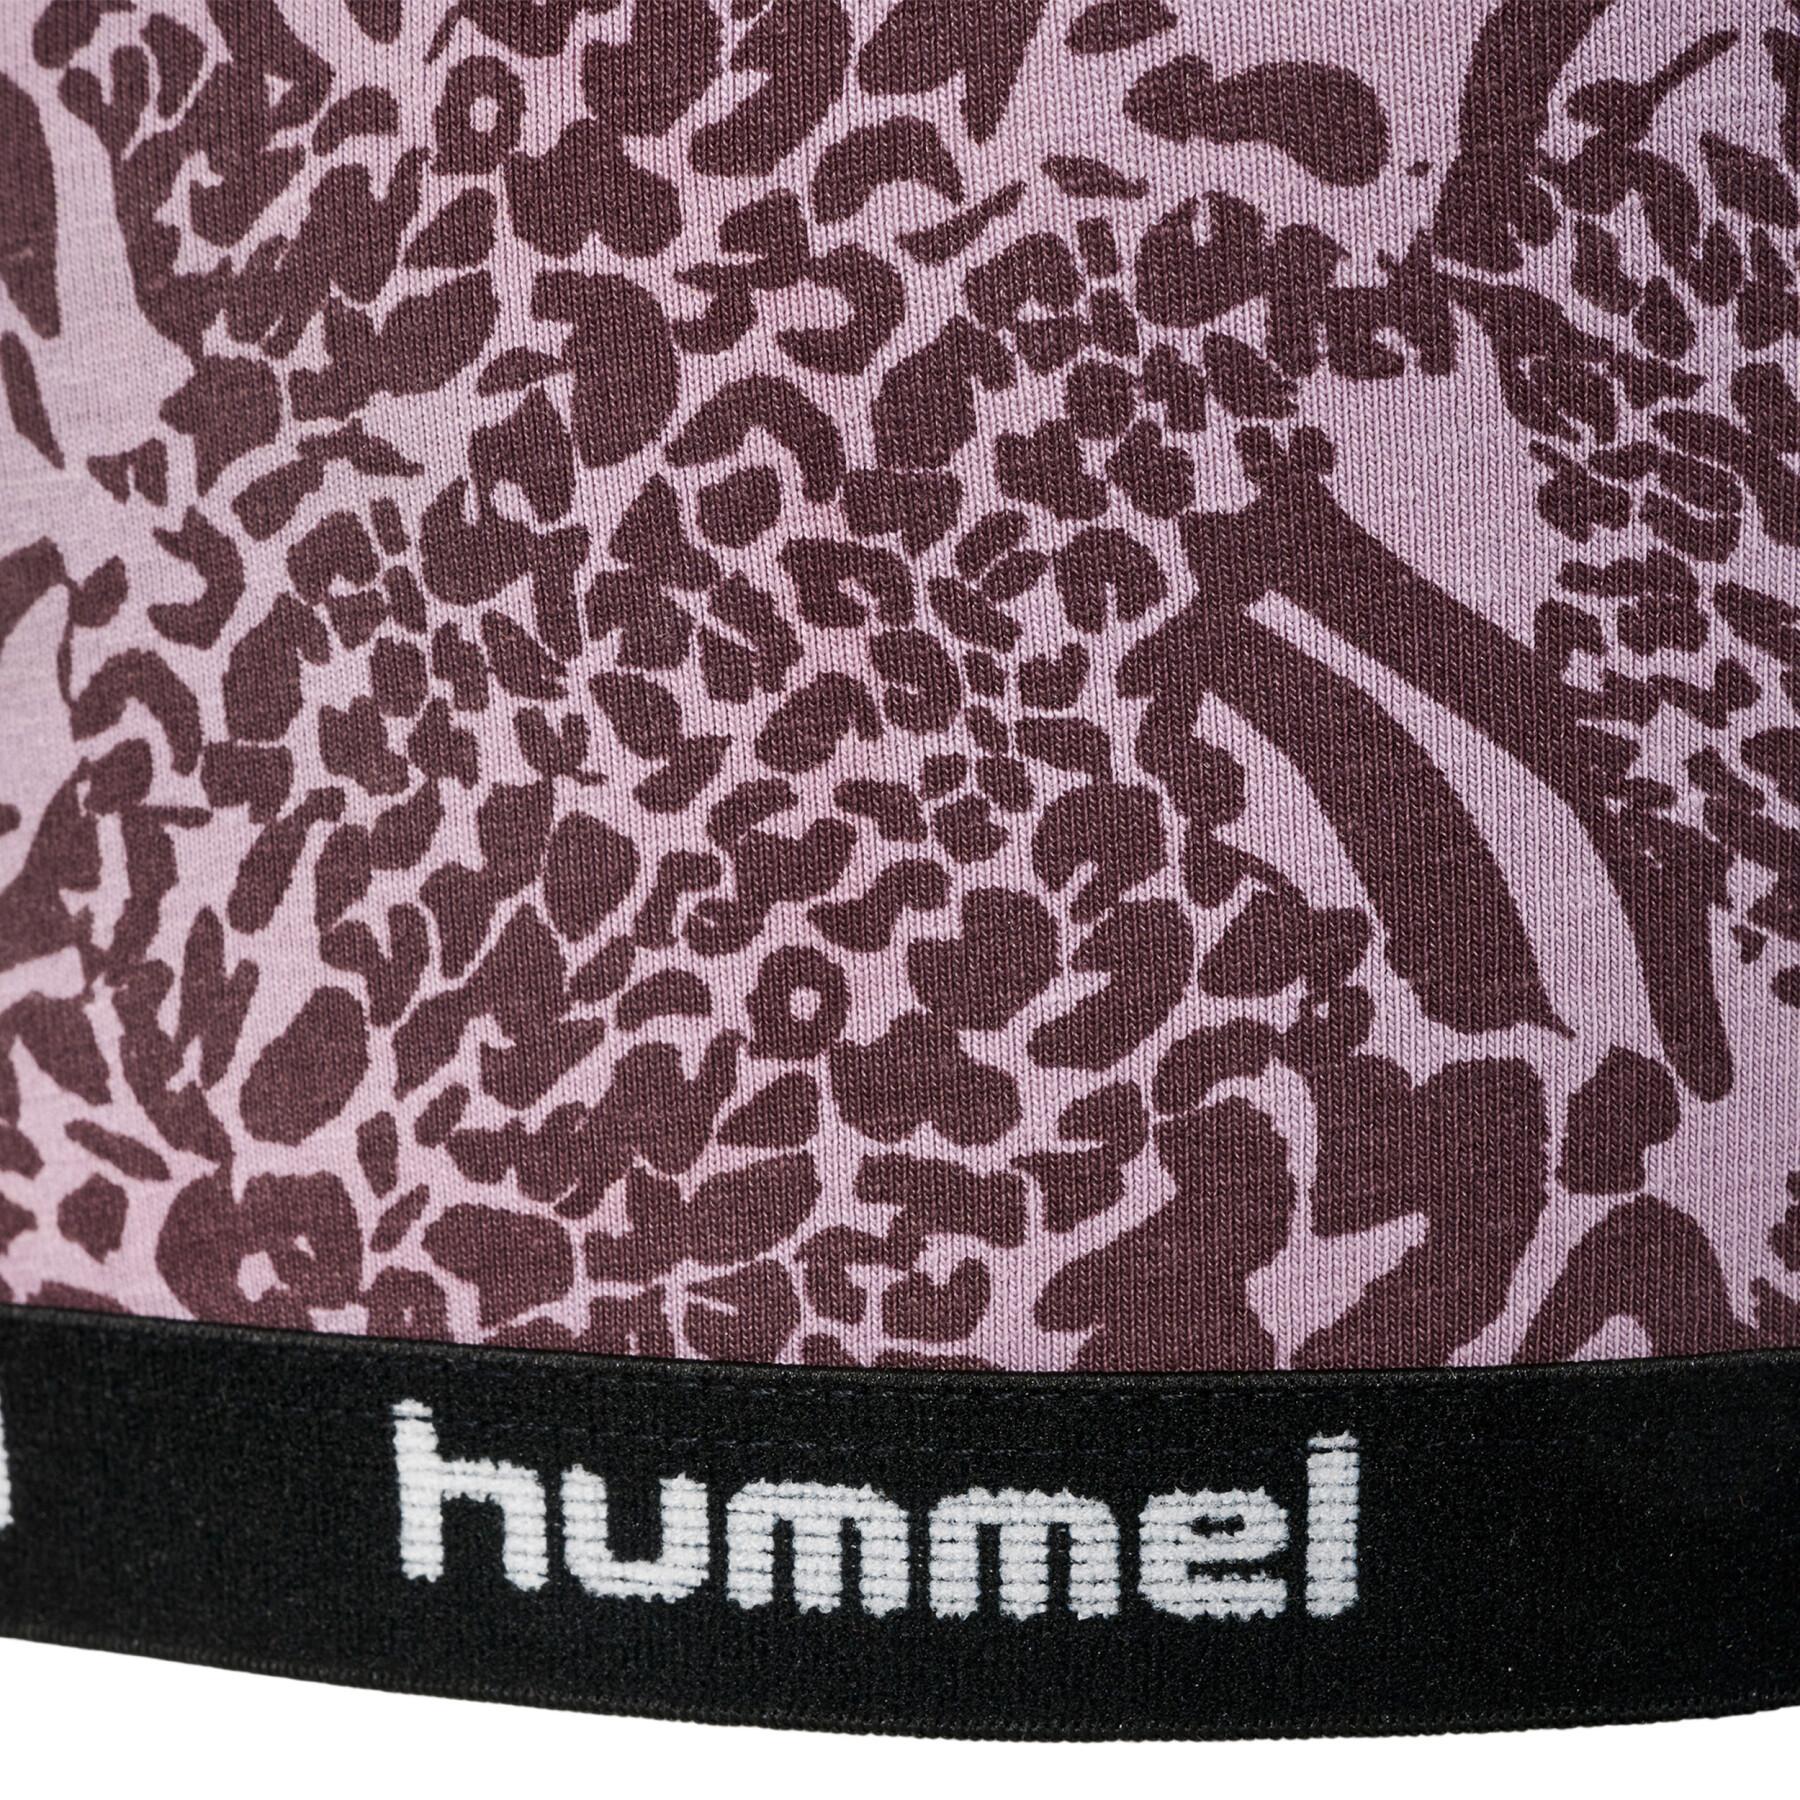 Girls' bras Hummel Carolina (x2)